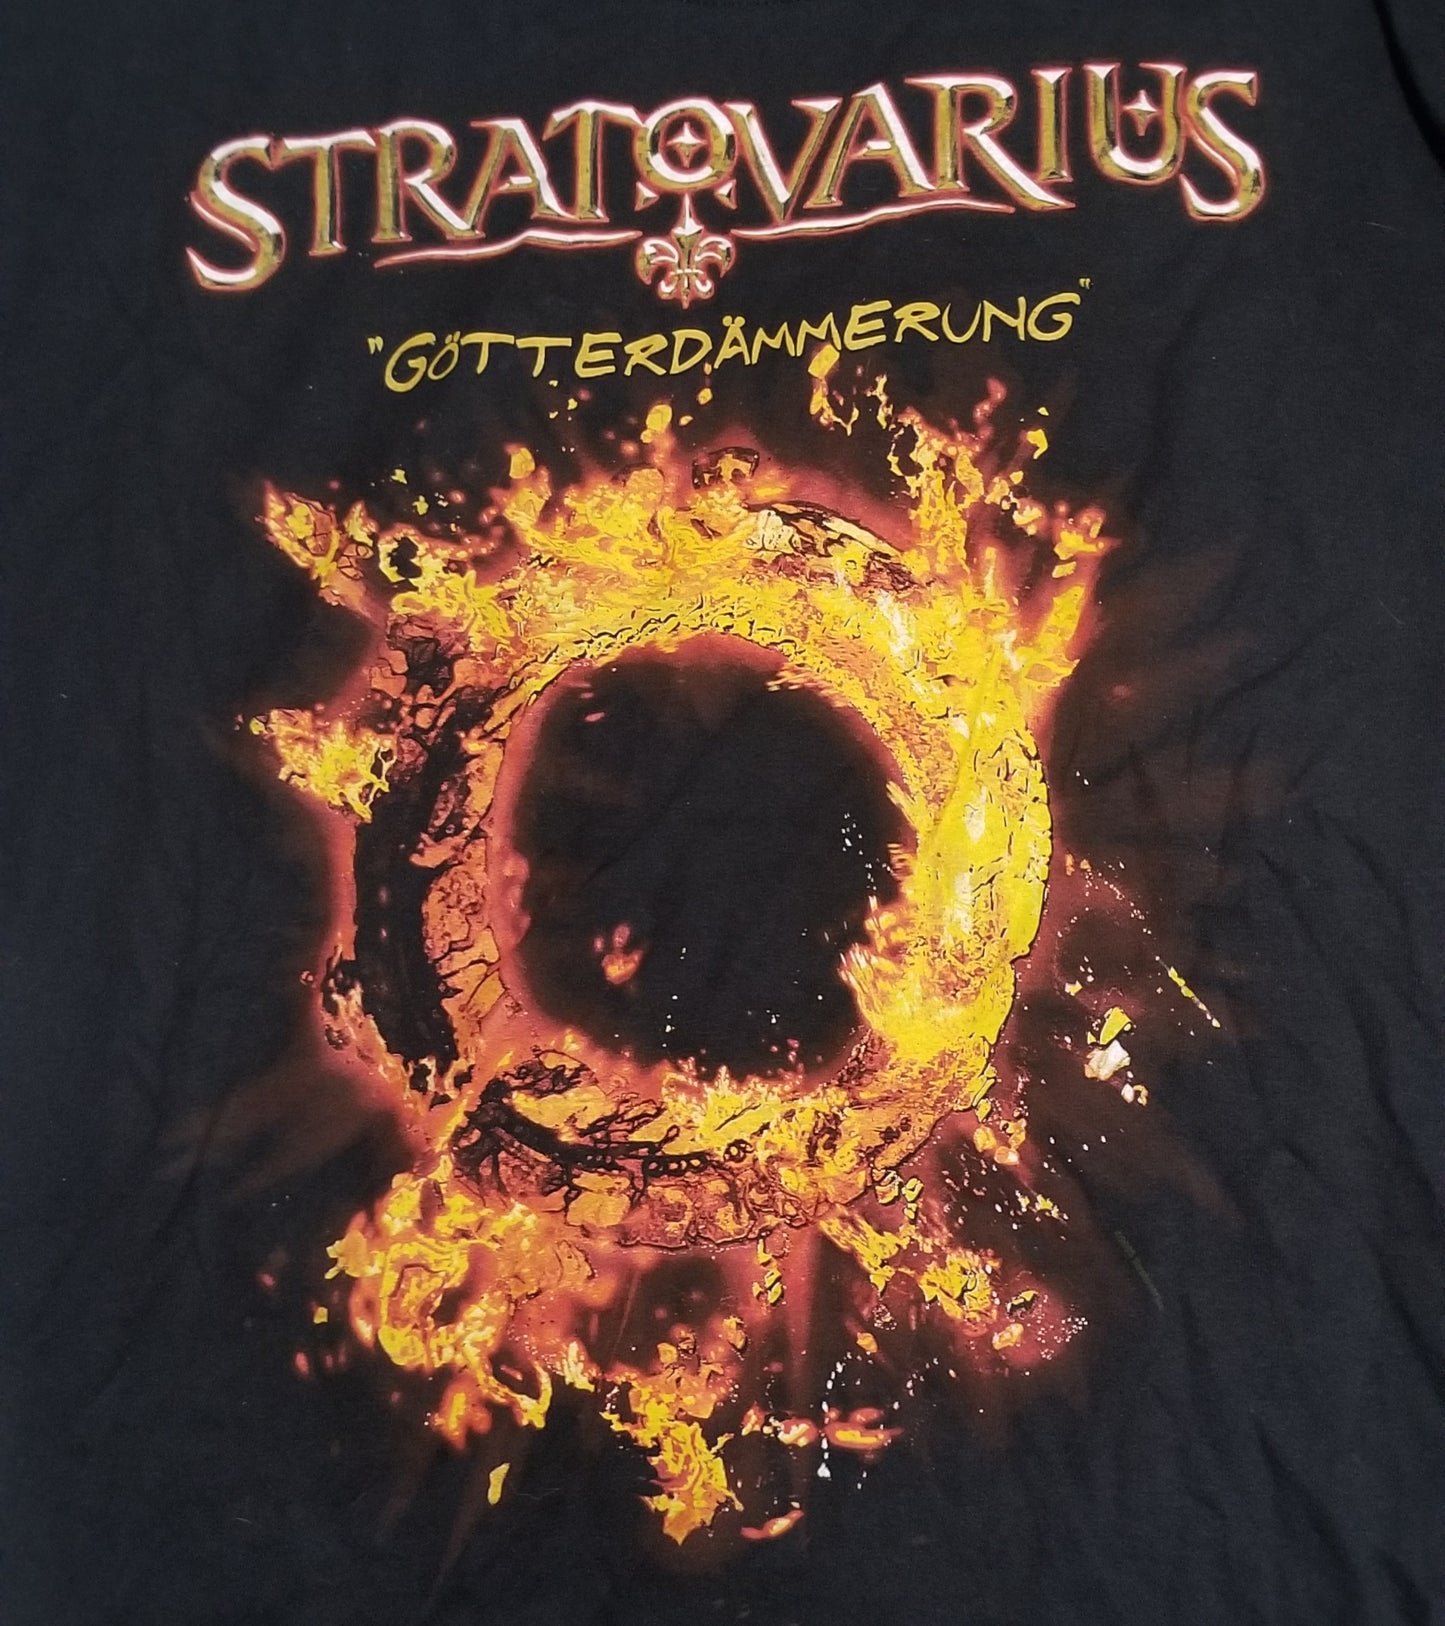 Stradivarius - 2005 North American Tour, T-Shirt